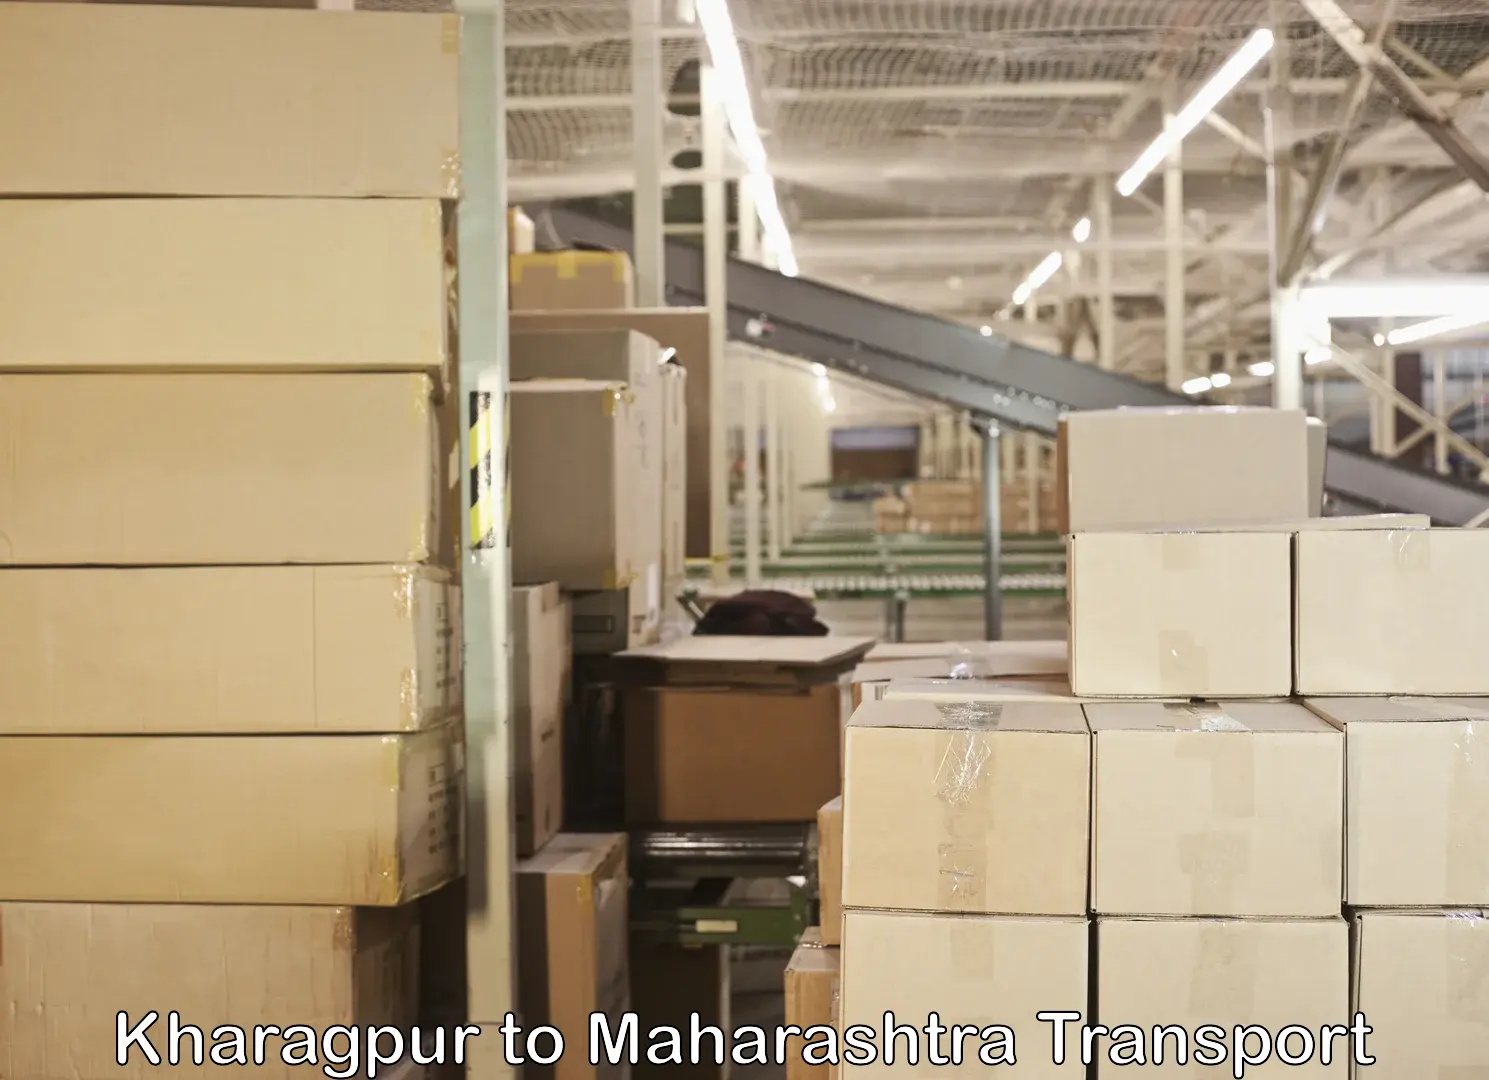 Truck transport companies in India Kharagpur to Maharashtra